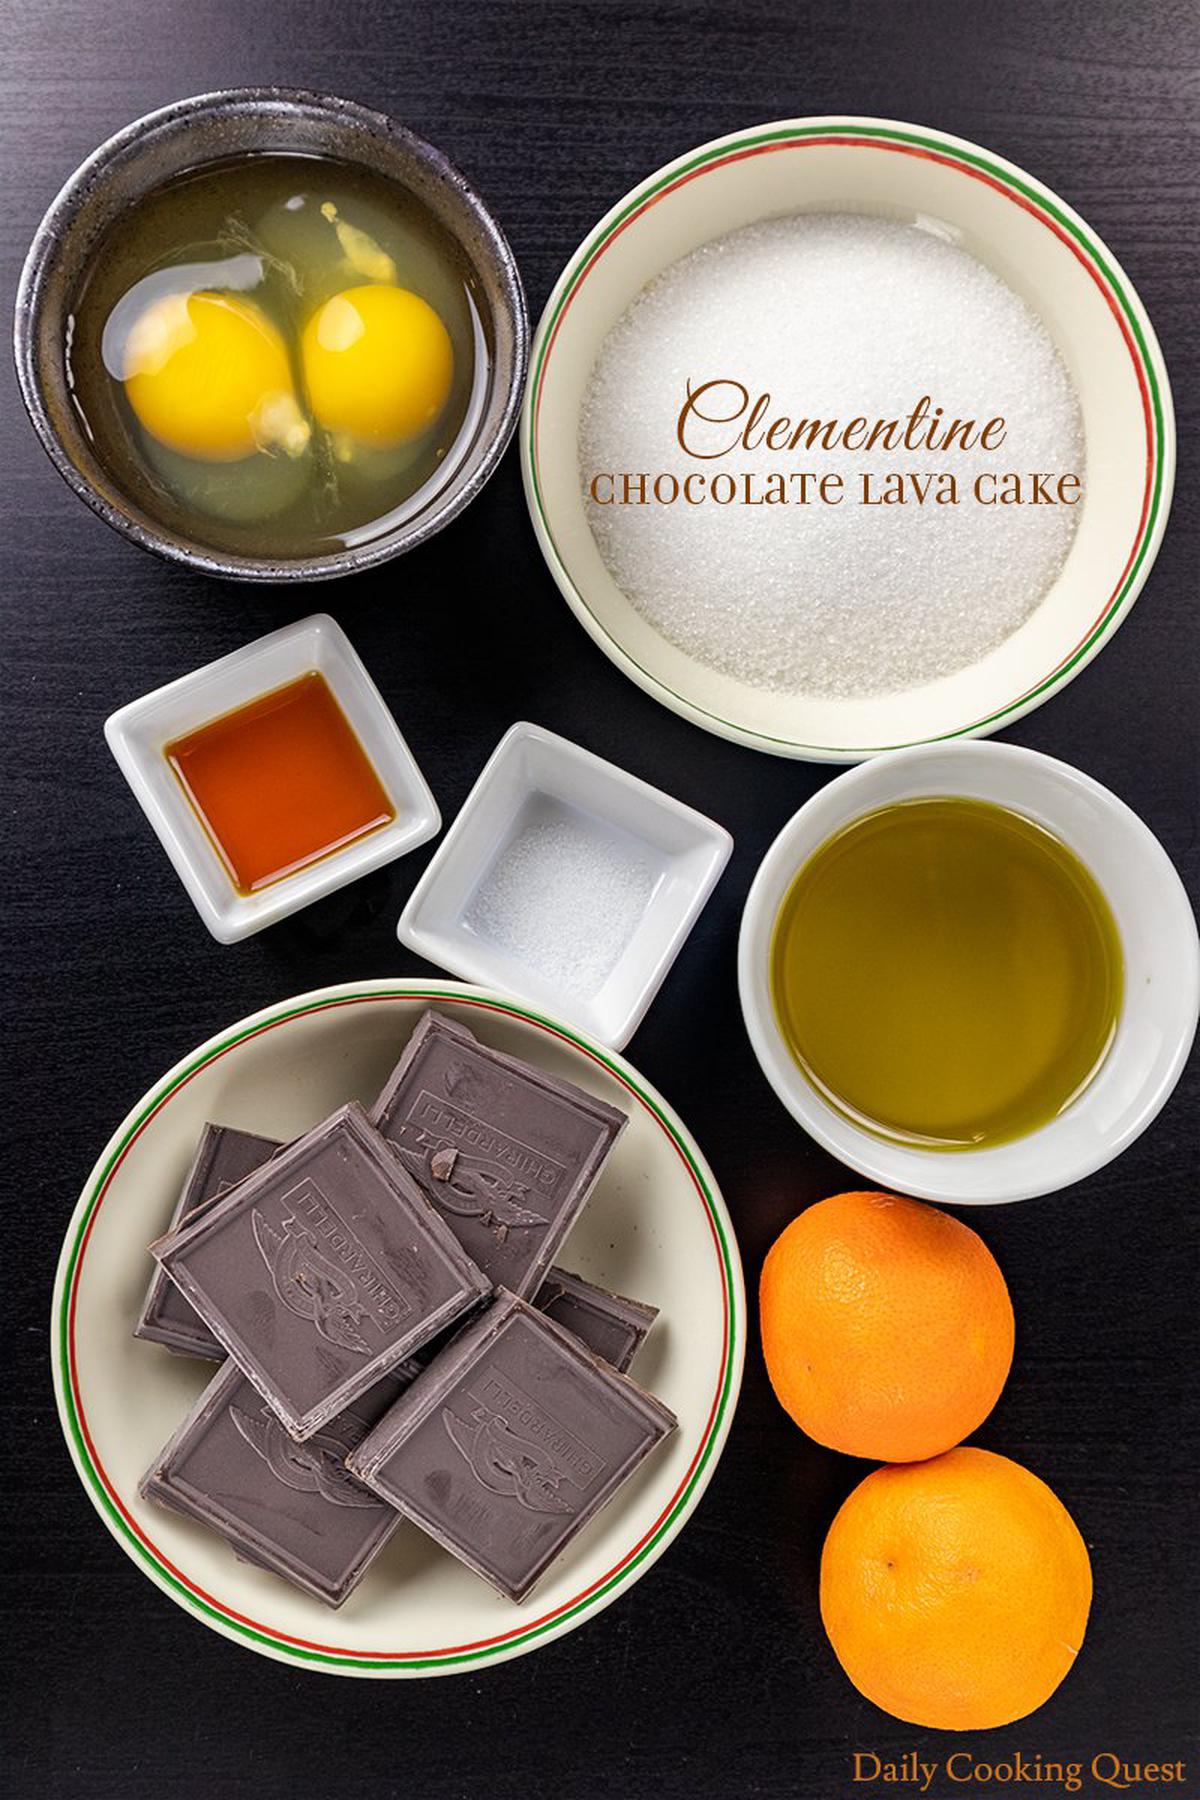 Clementine Chocolate Lava Cake